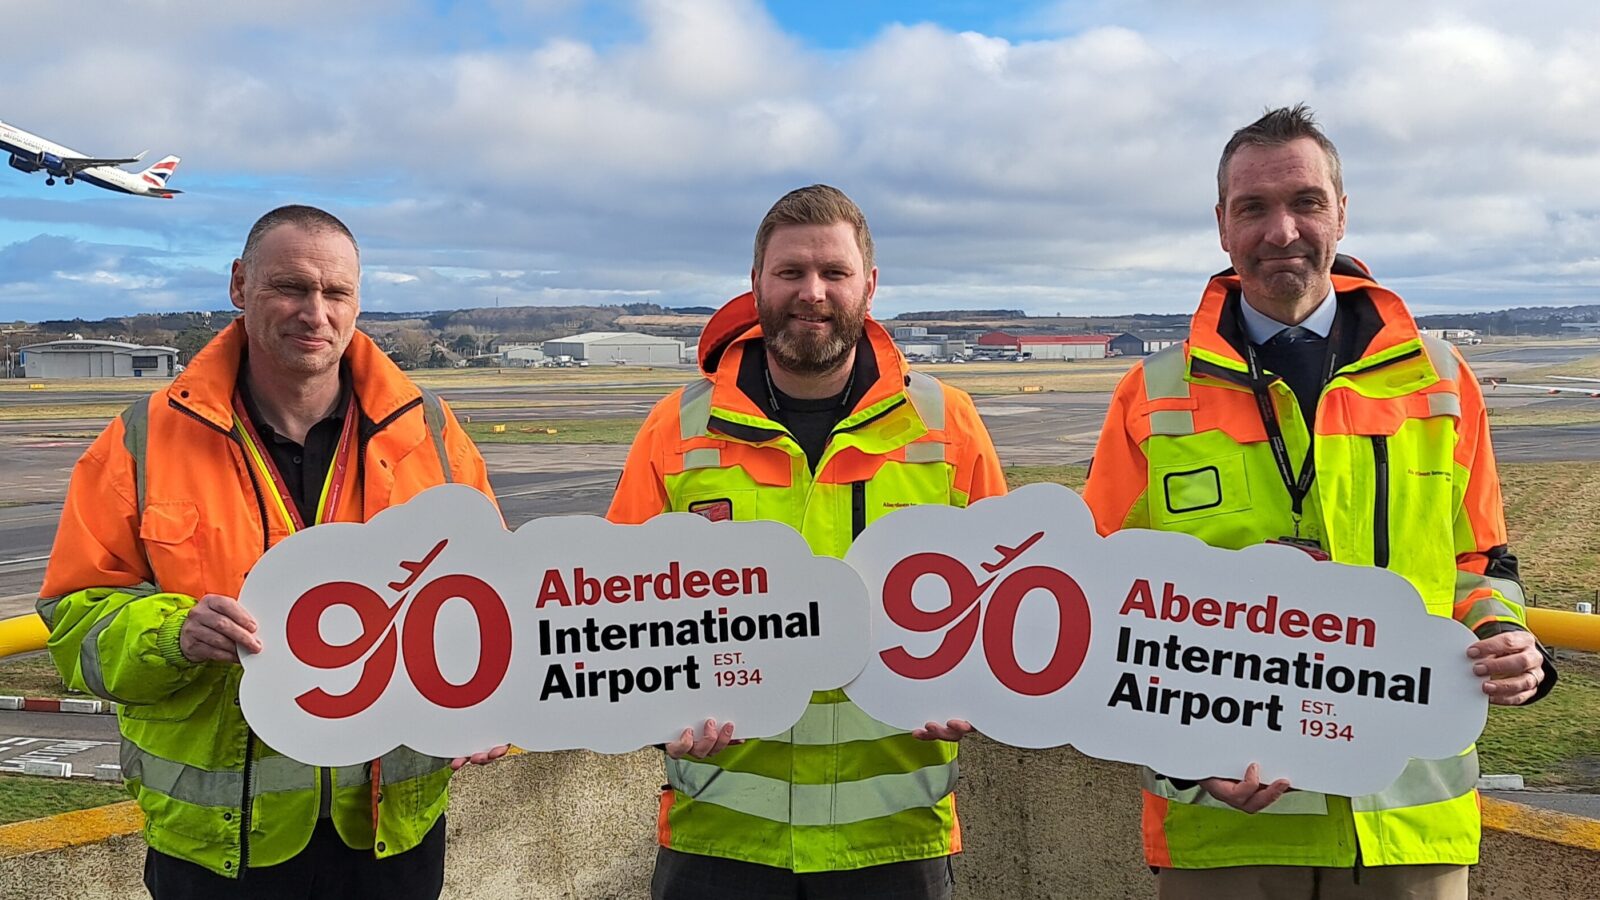 Share your memories as Granite Celebrations start at Aberdeen International Airport